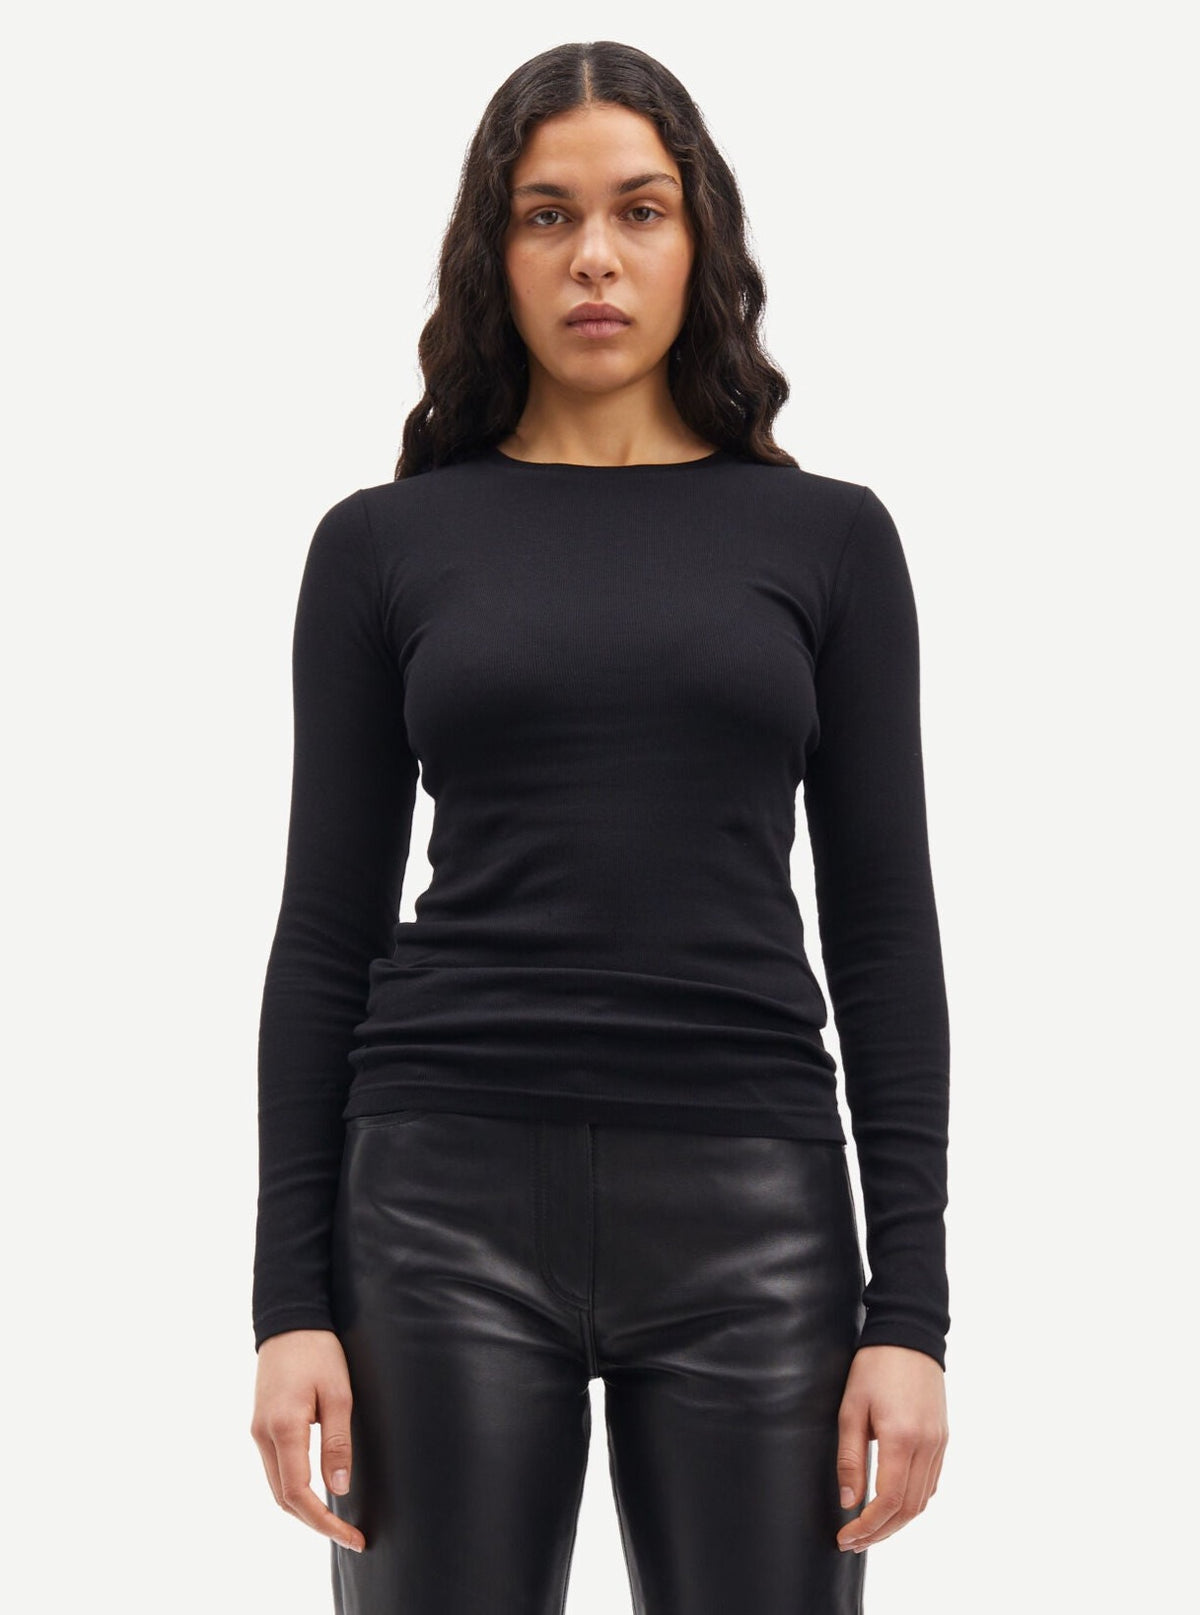 Samsoe Alexa Tee in Black - Size M Available